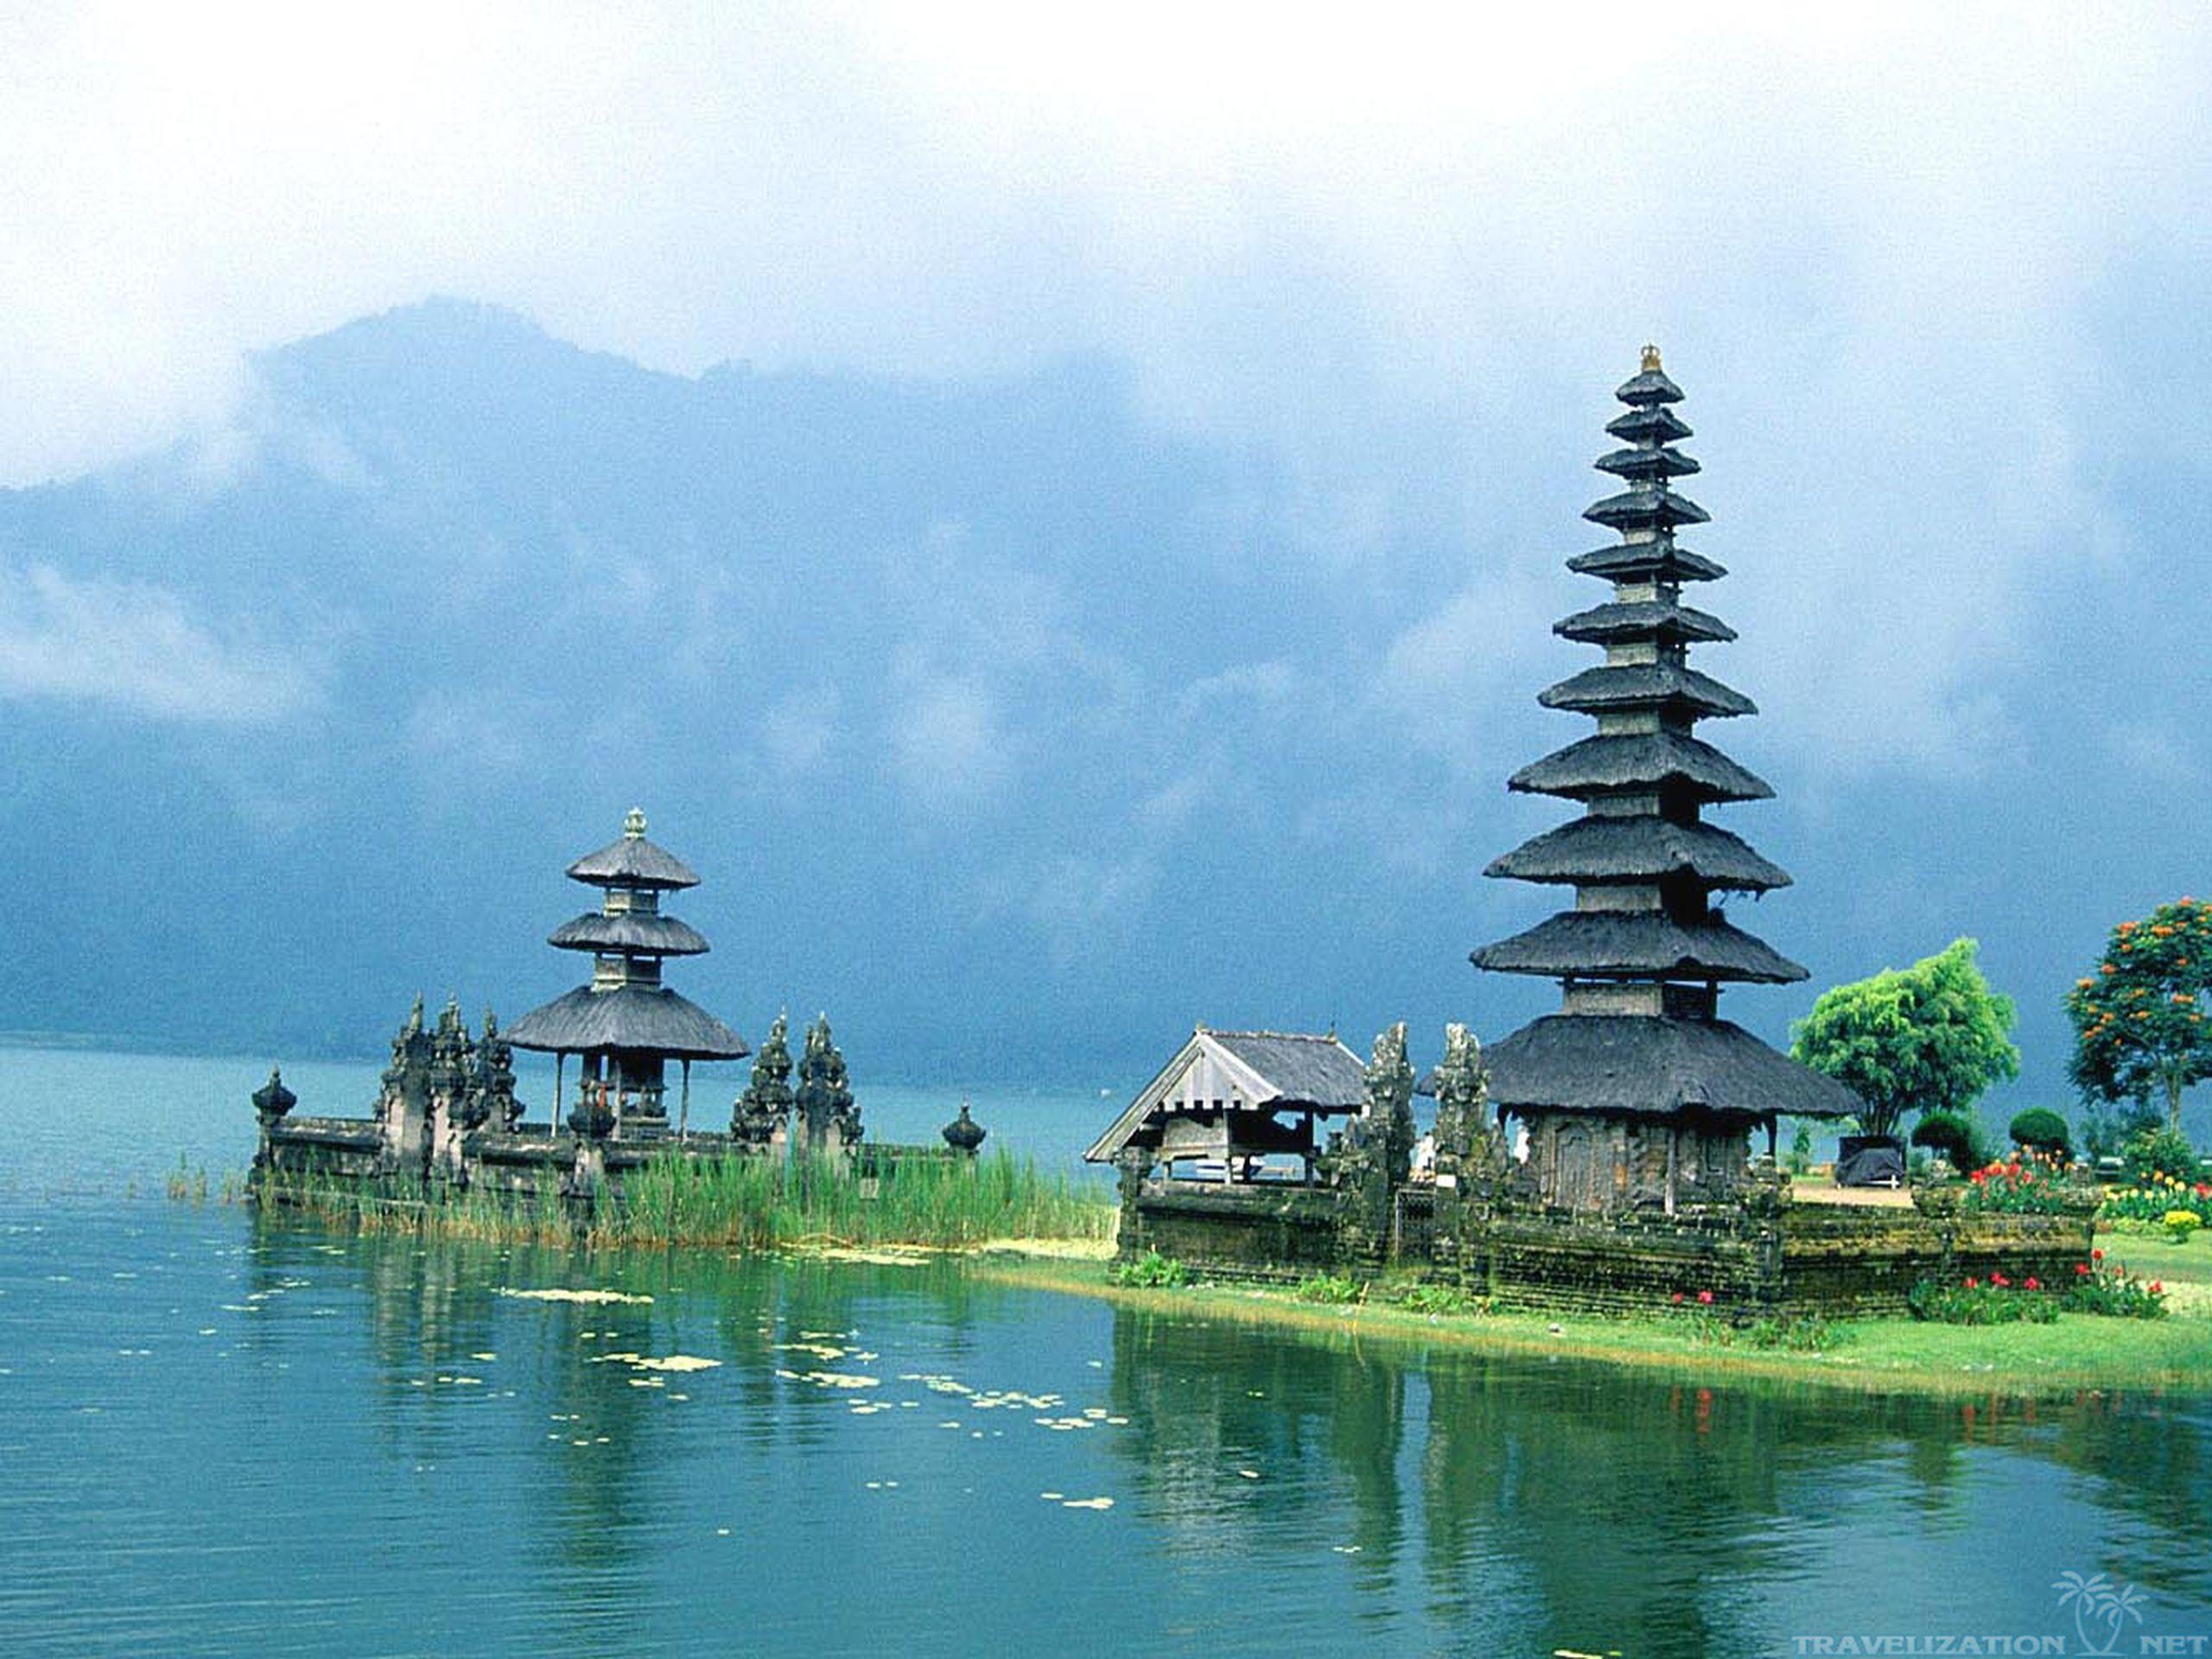  Bali  Desktop Wallpapers  Top Free Bali  Desktop 